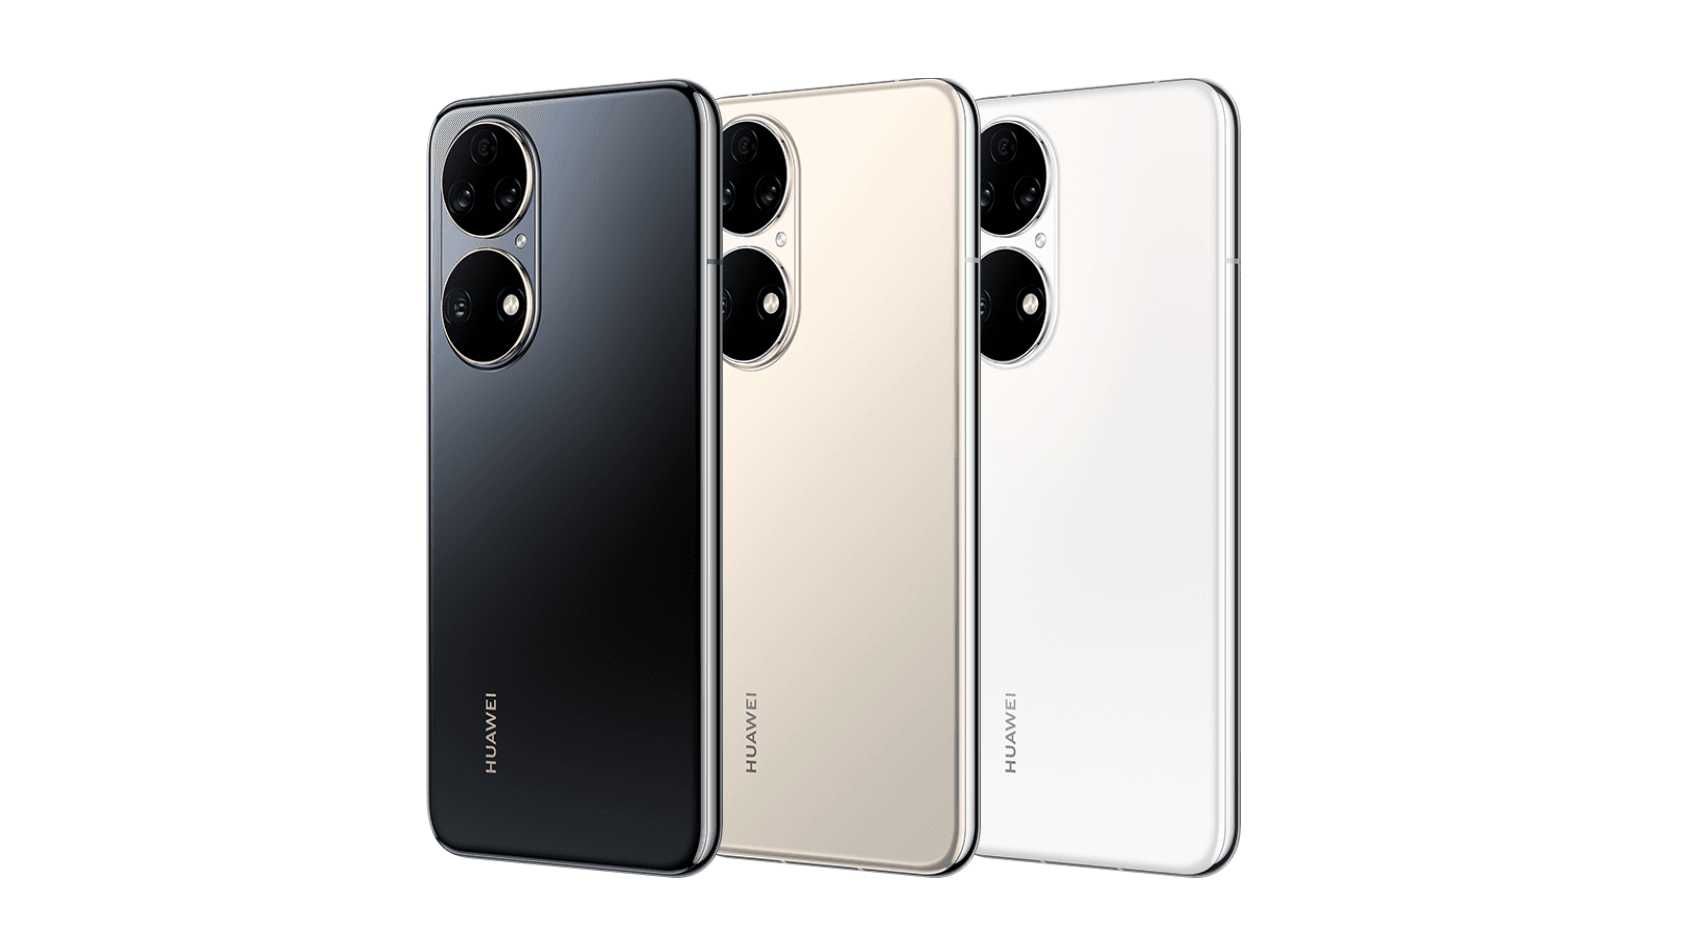 Huawei P50 phones